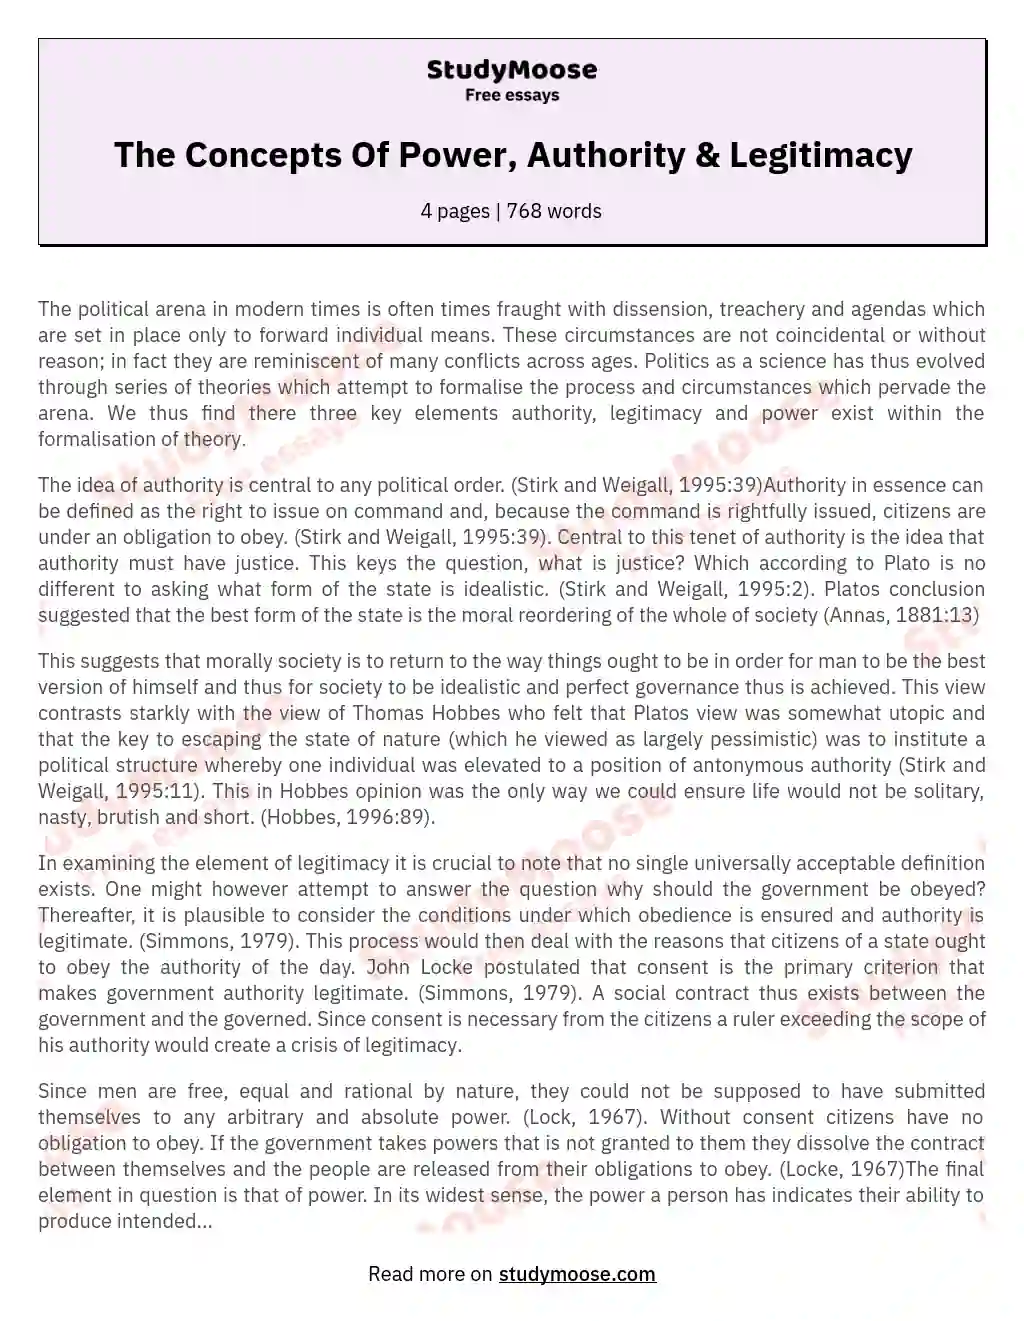 The Concepts Of Power, Authority & Legitimacy essay